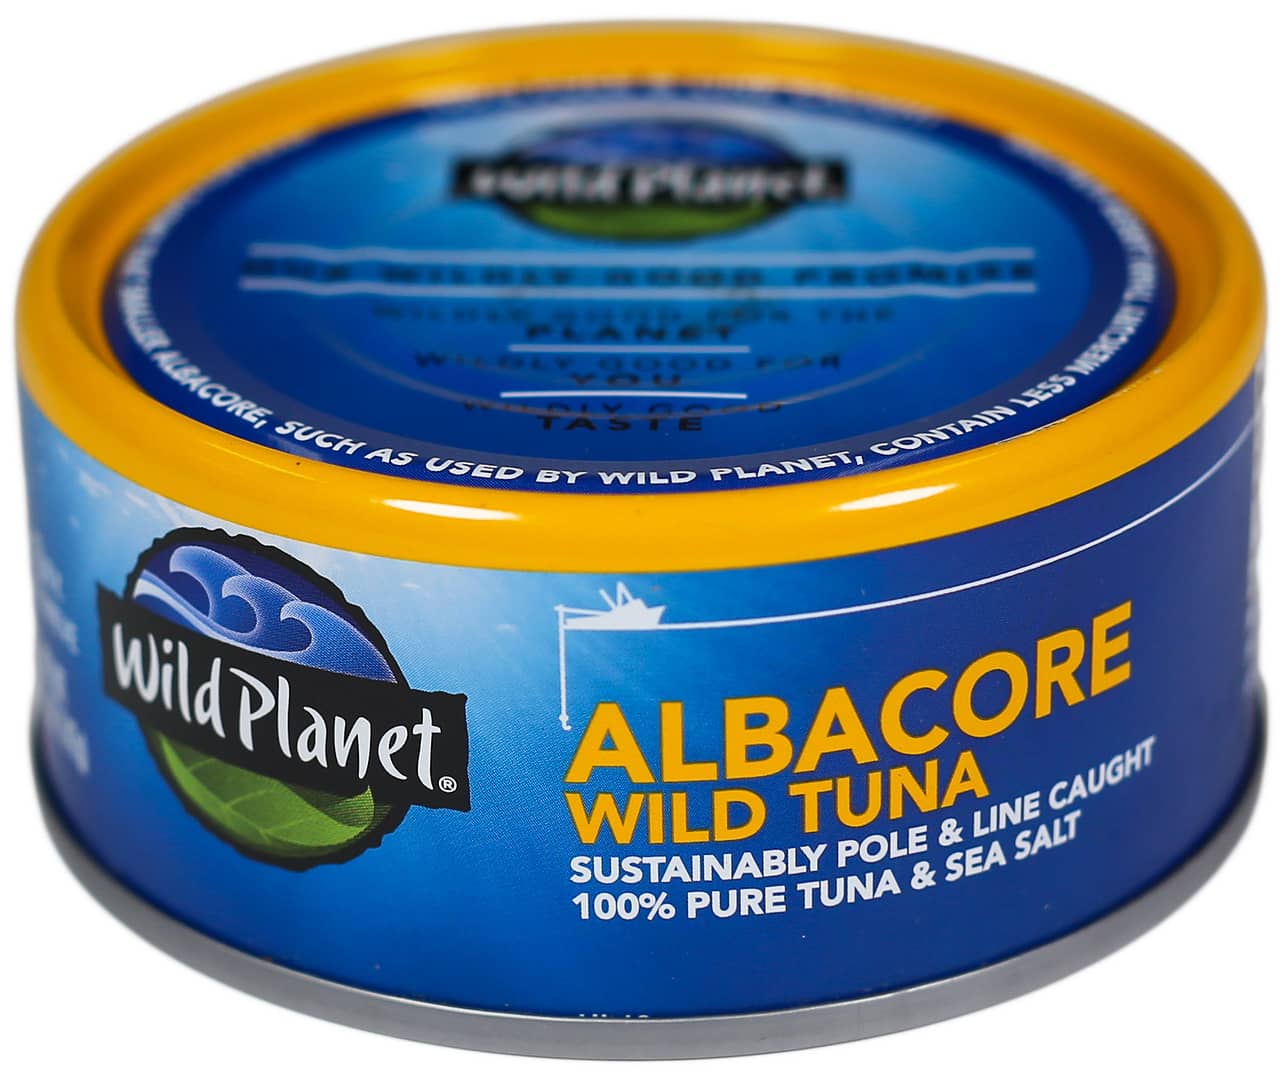 Wild Planet tuna. This might be even worse than lark's vomit.